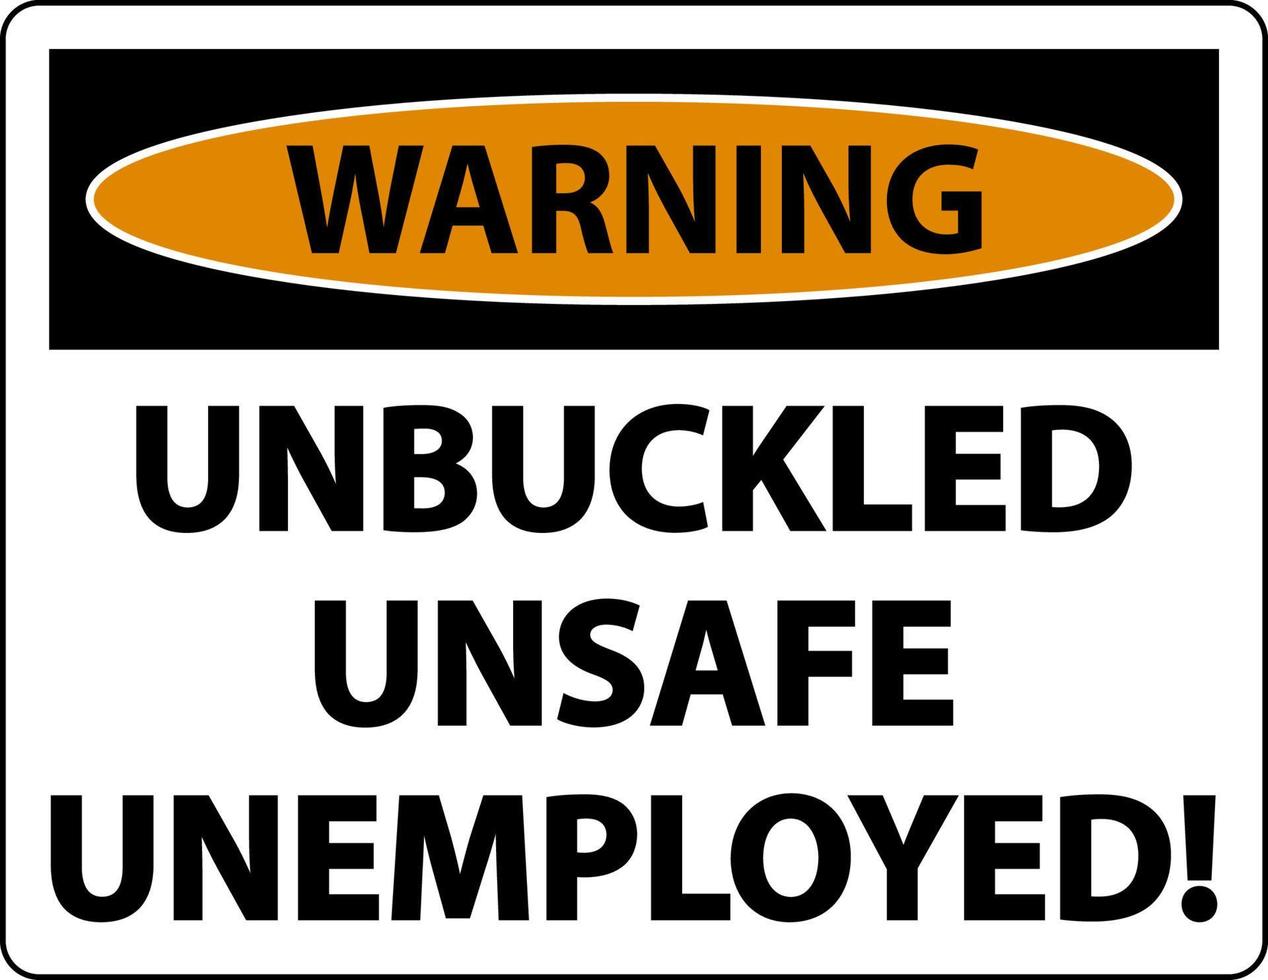 Warning Unbuckled Unsafe Unemployed Sign On White Background vector